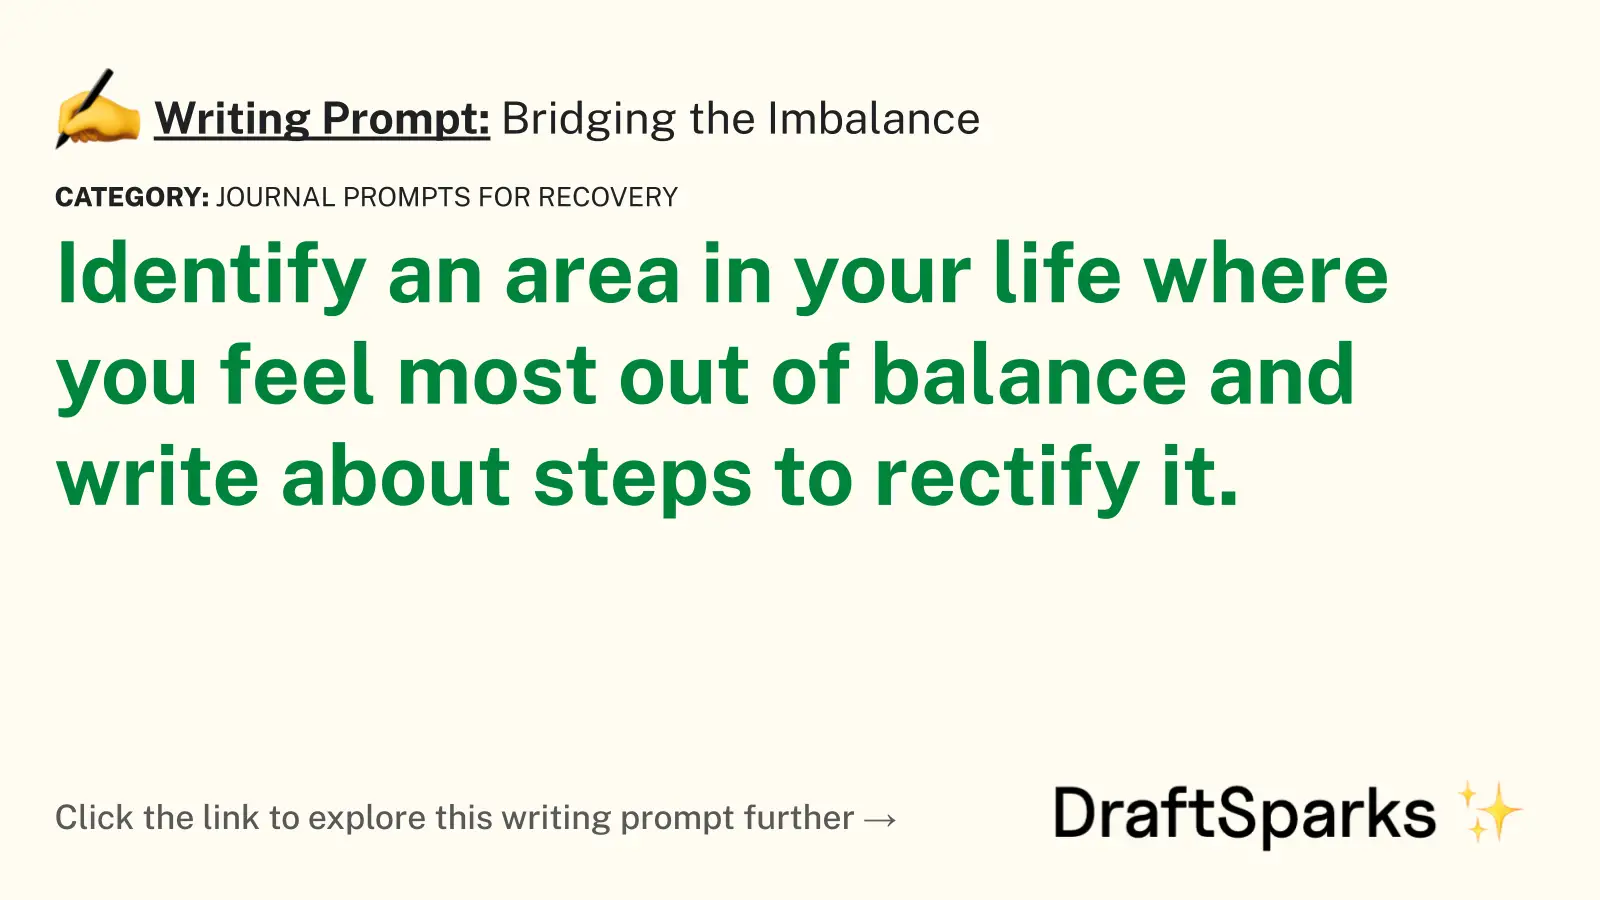 Bridging the Imbalance